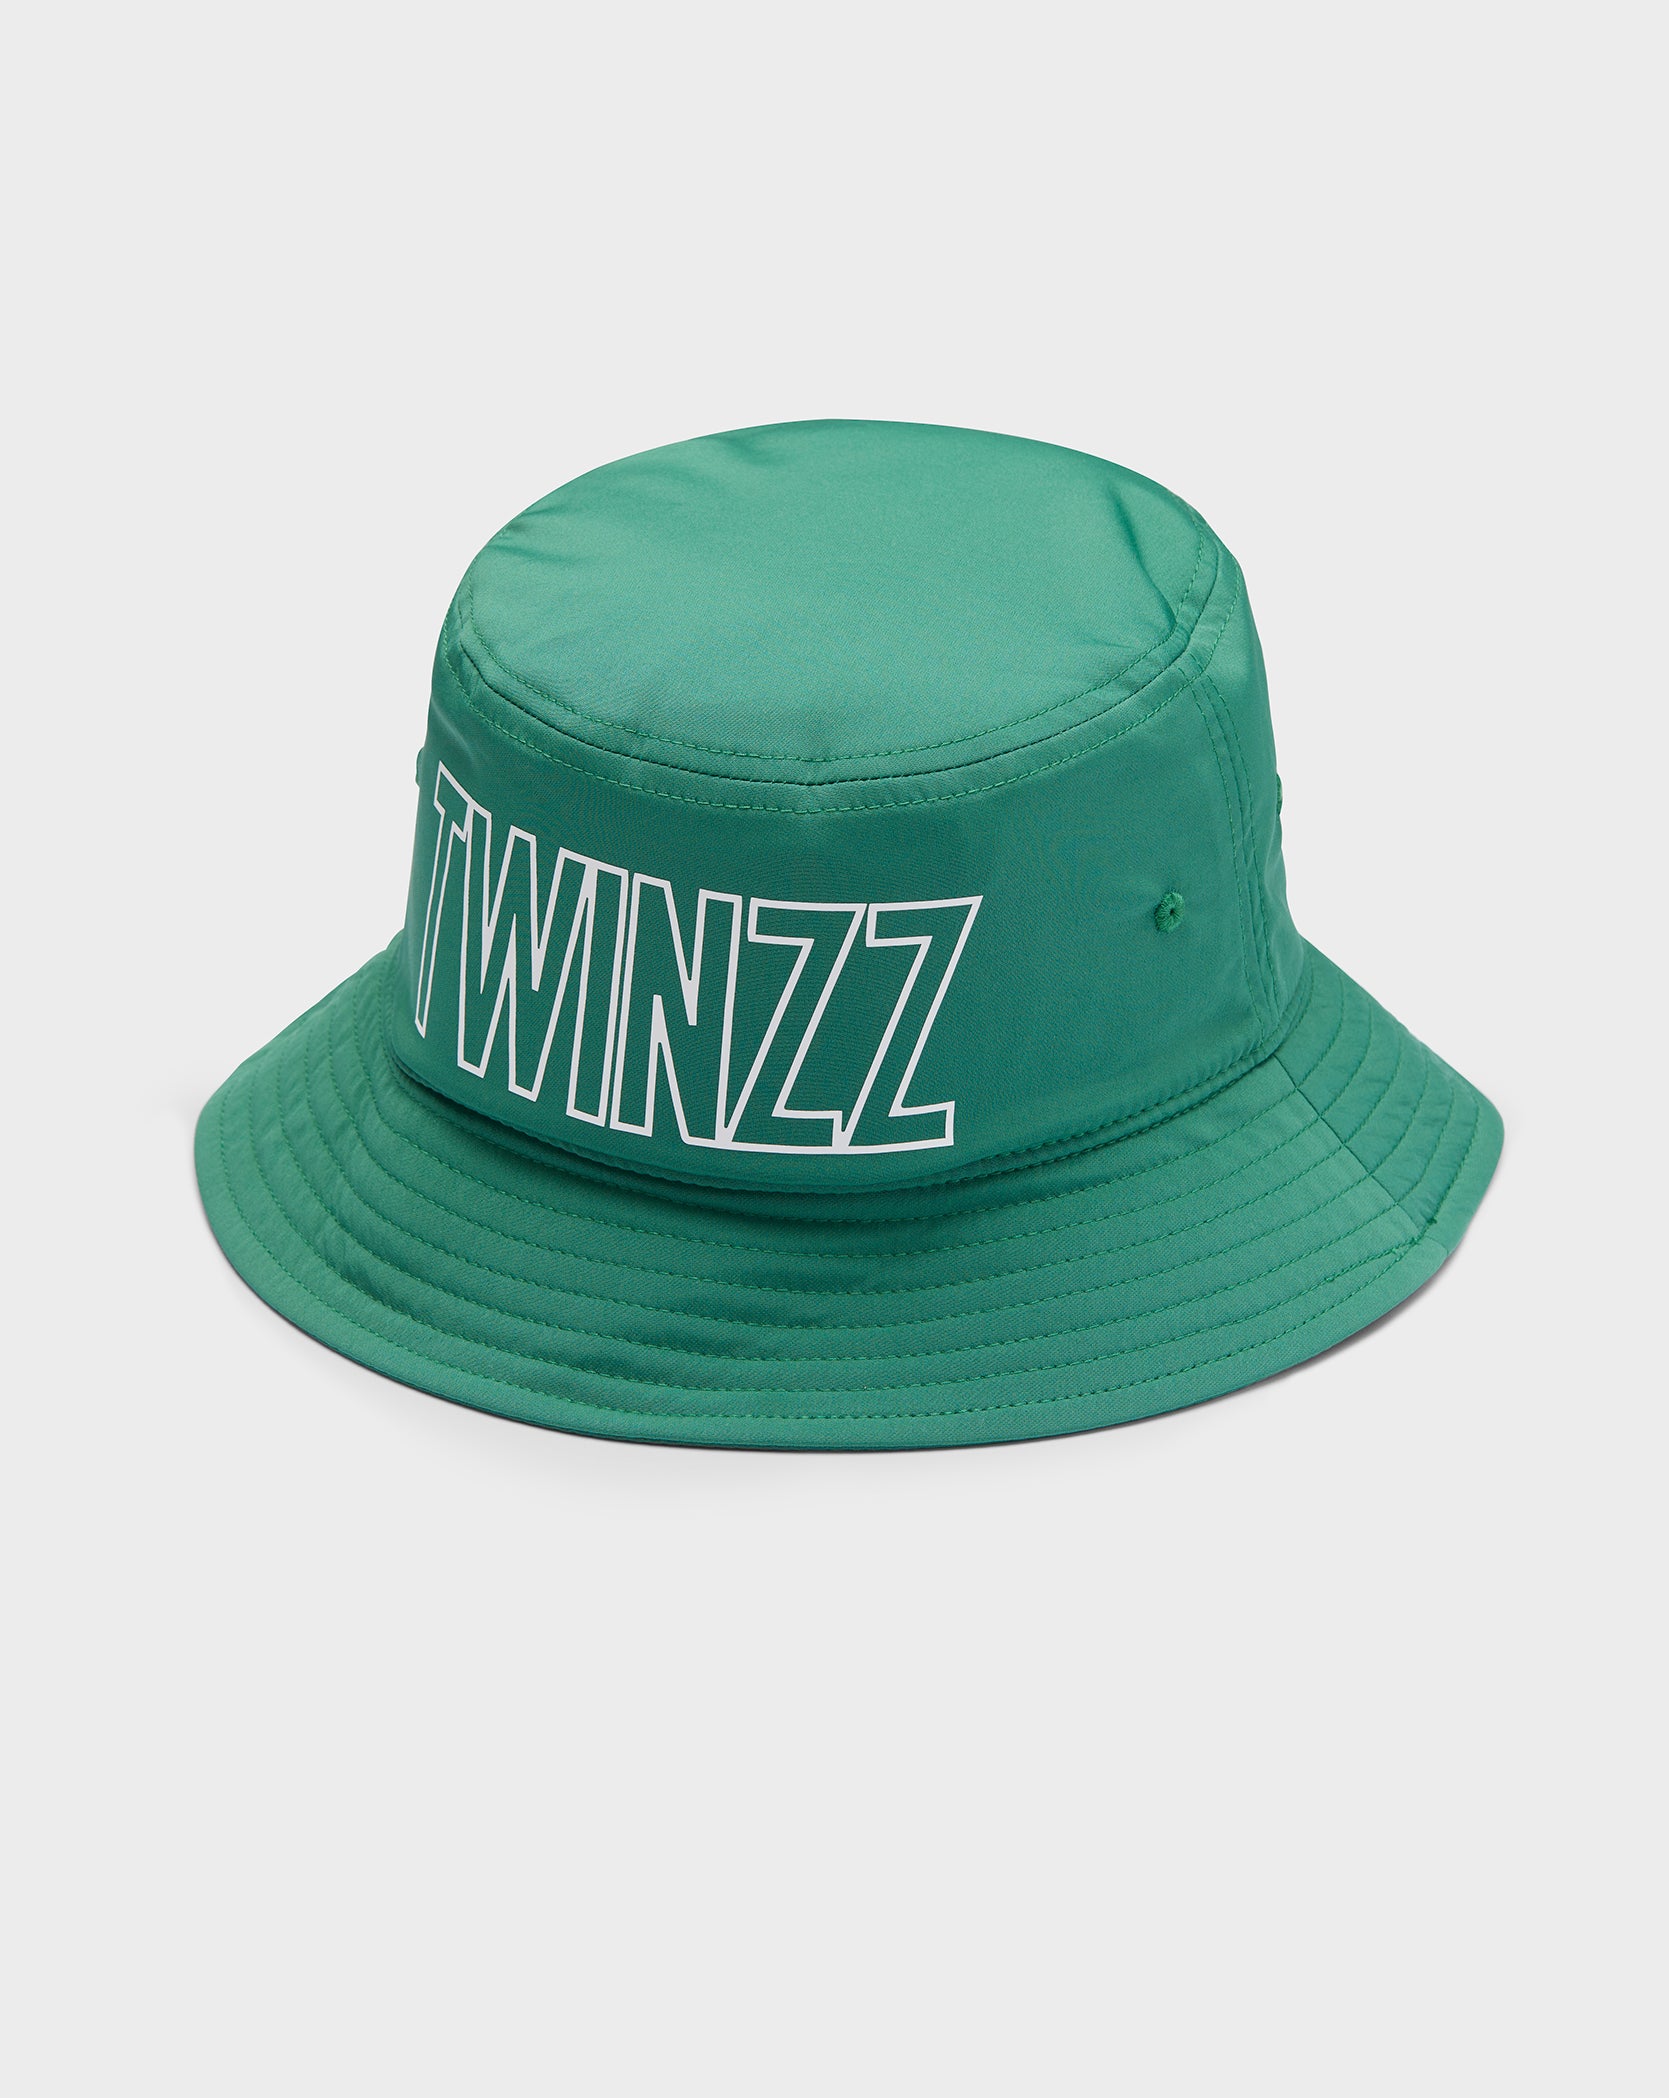 TWINZZ BUCKET HAT - GREEN